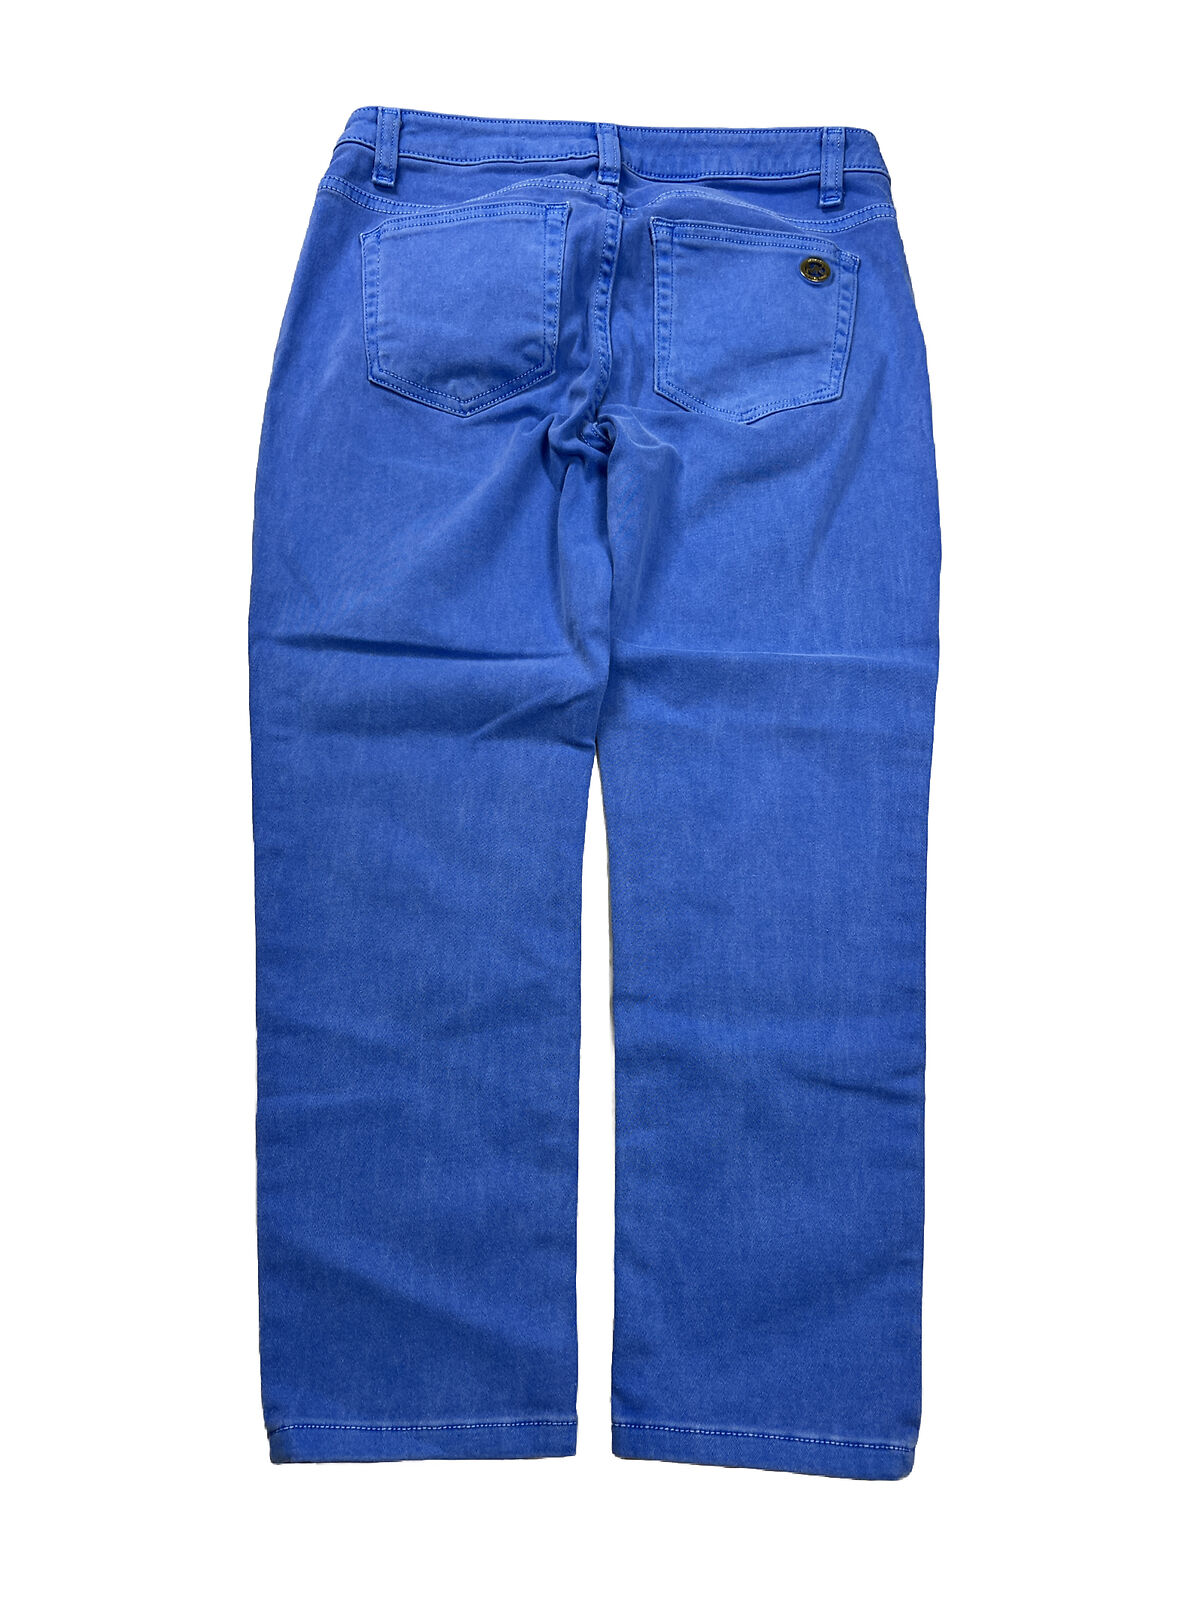 Michael Kors Women's Blue Izzy Cropped Skinny Jeans - 4